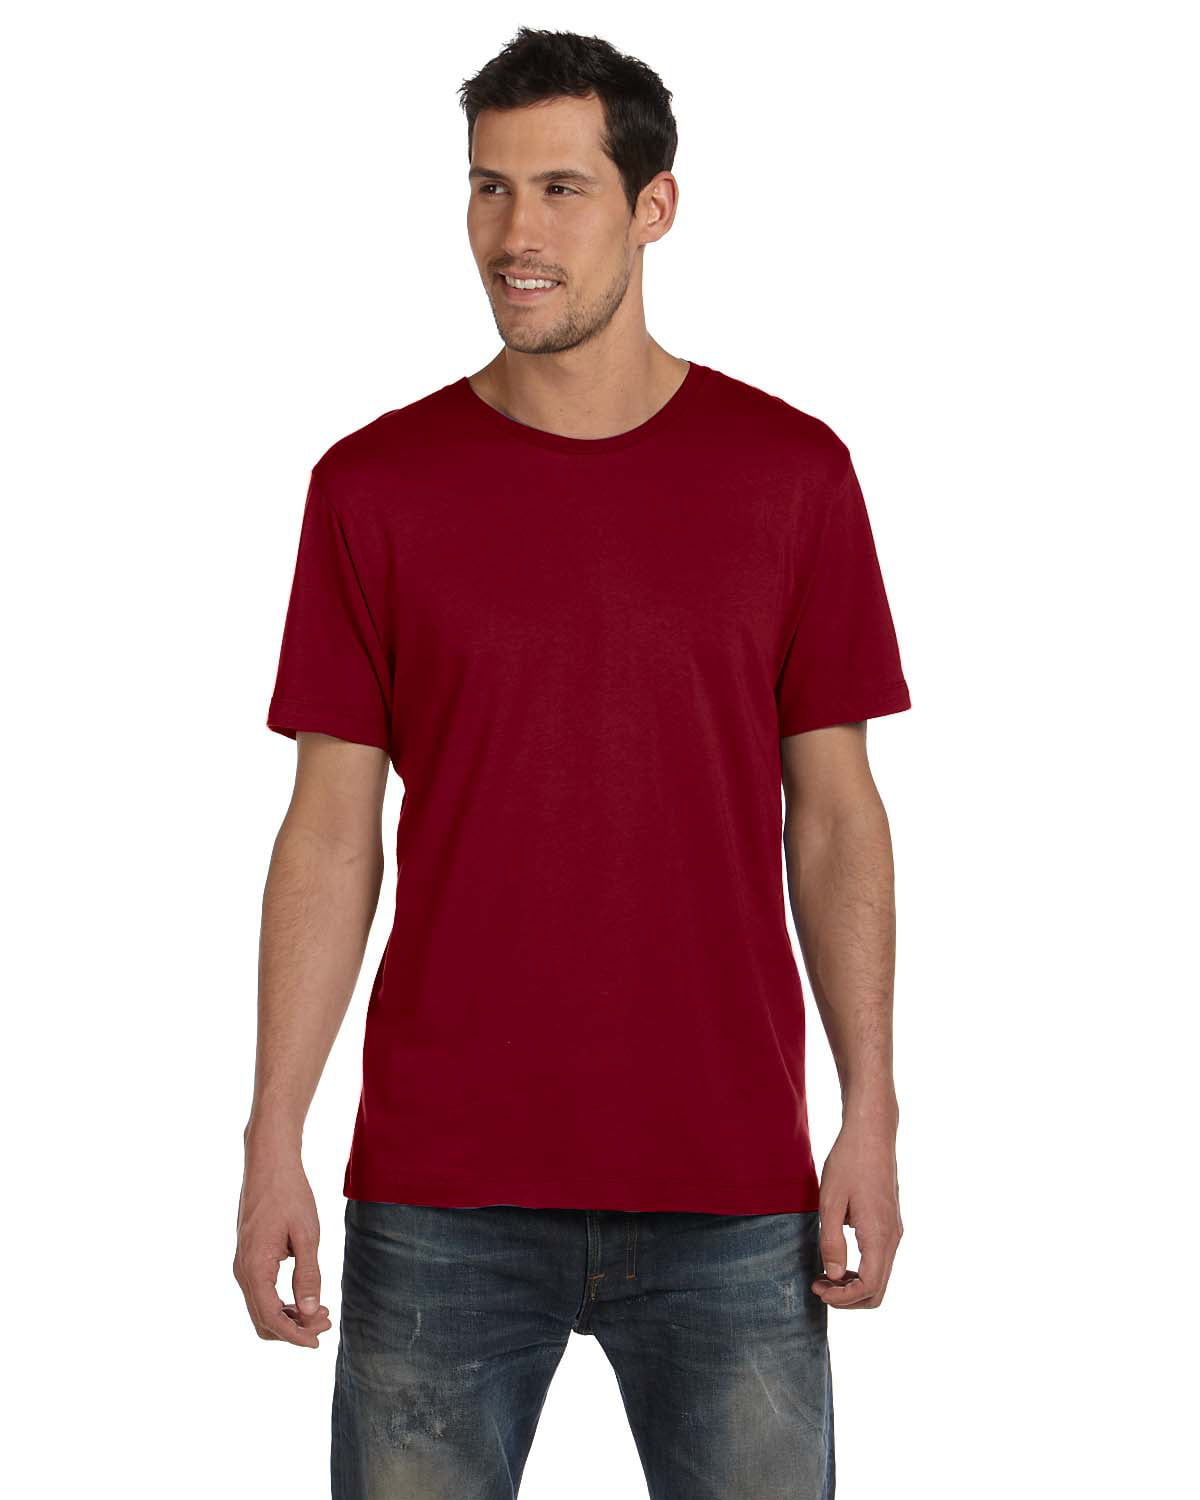 1070 Alternative Men's Basic Crew 100% Cotton T-shirt S-3XL AA1070 Made in WRAP